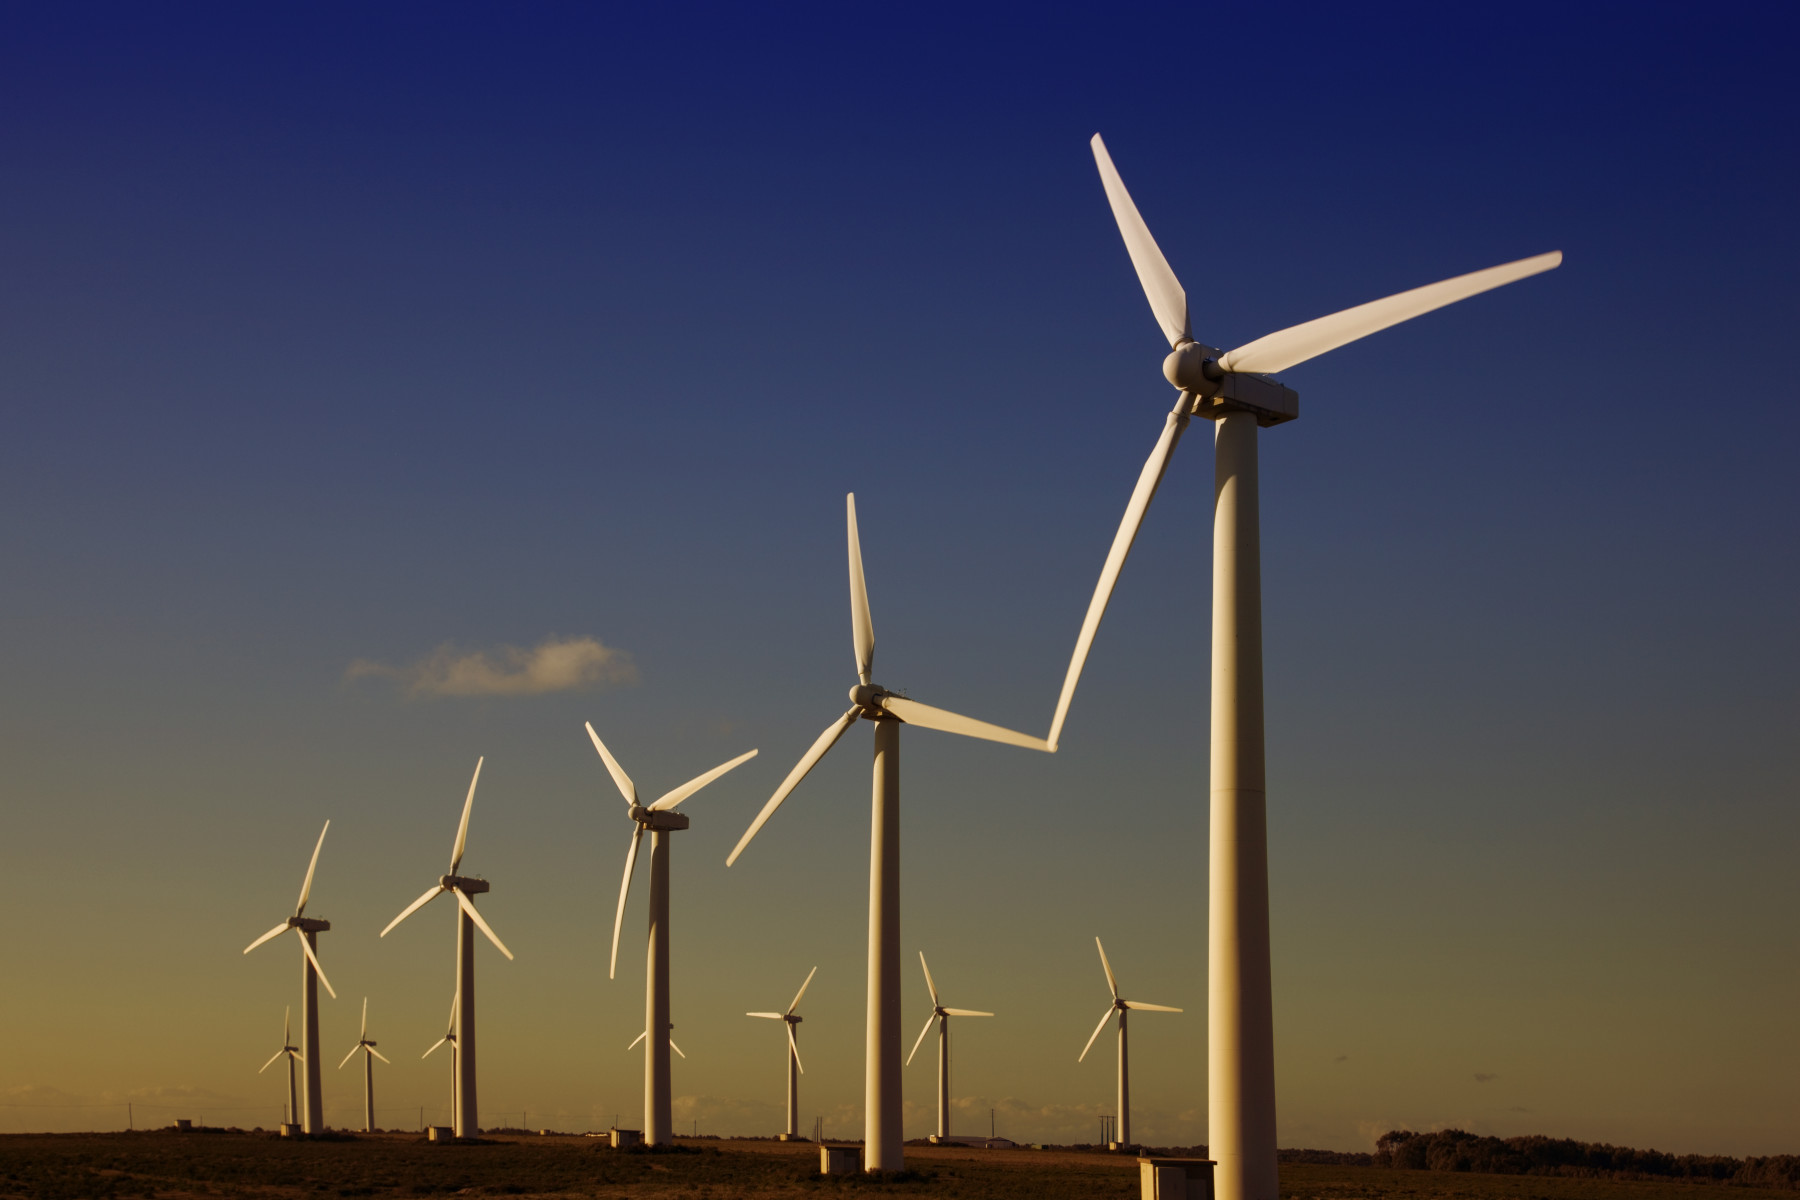 A row of wind turbines against a purplish blue skies.